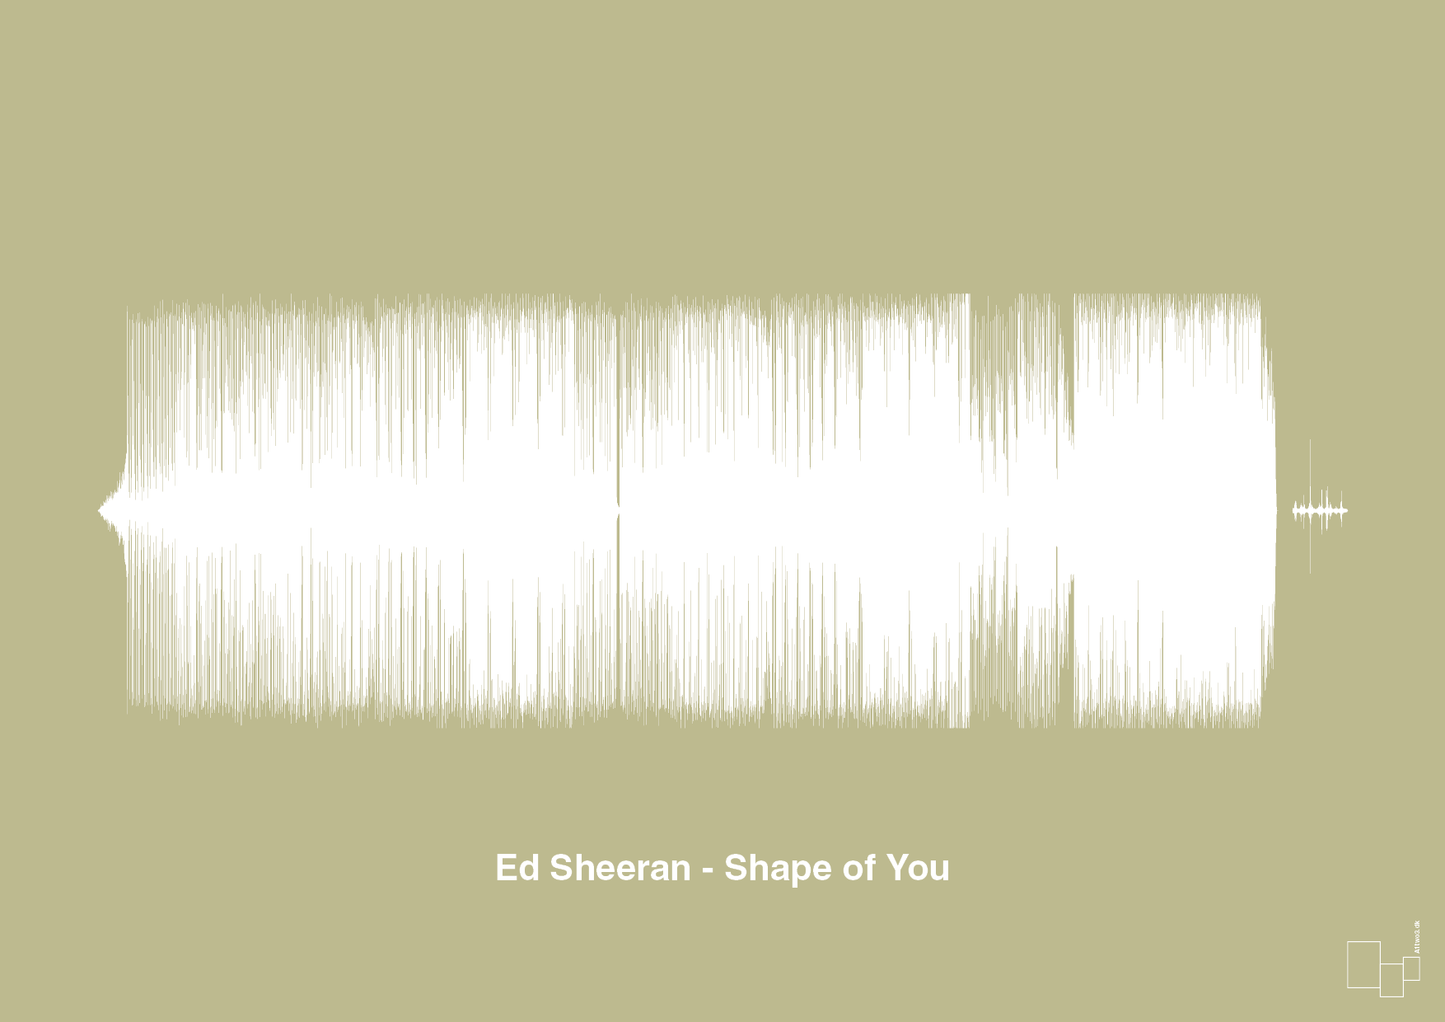 ed sheeran - shape of you - Plakat med Musik i Back to Nature